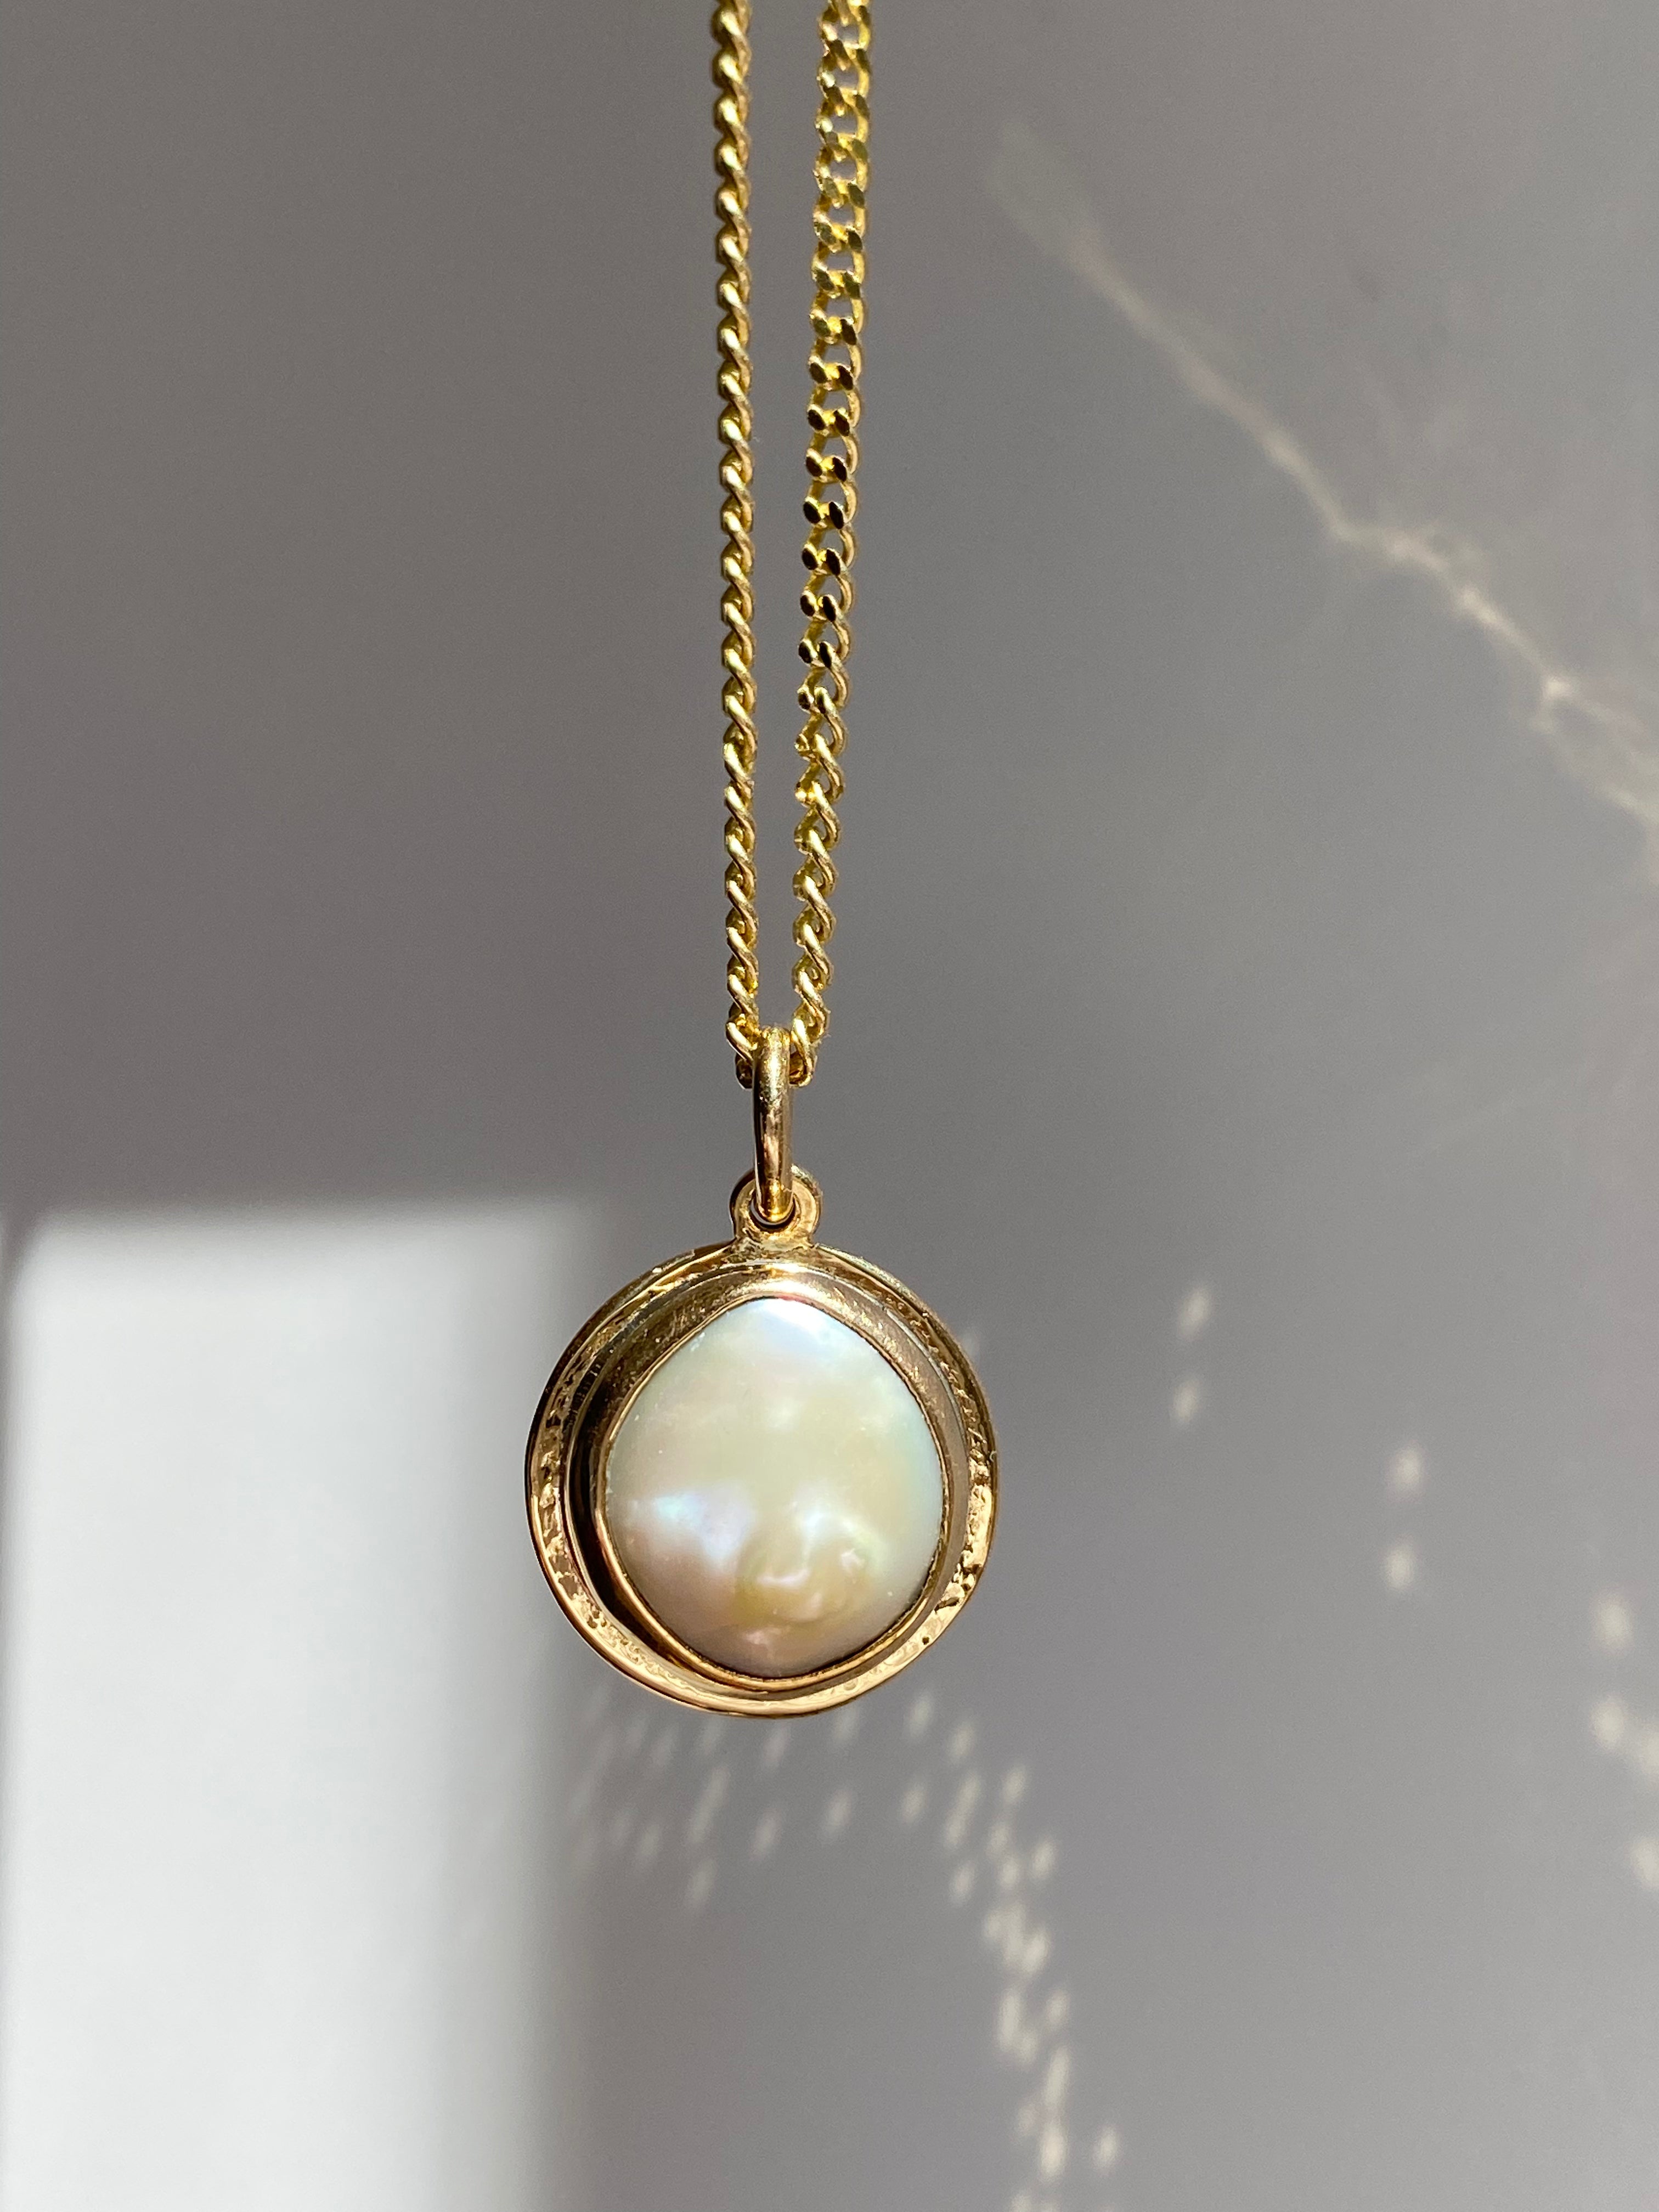 Altalune pearl necklace